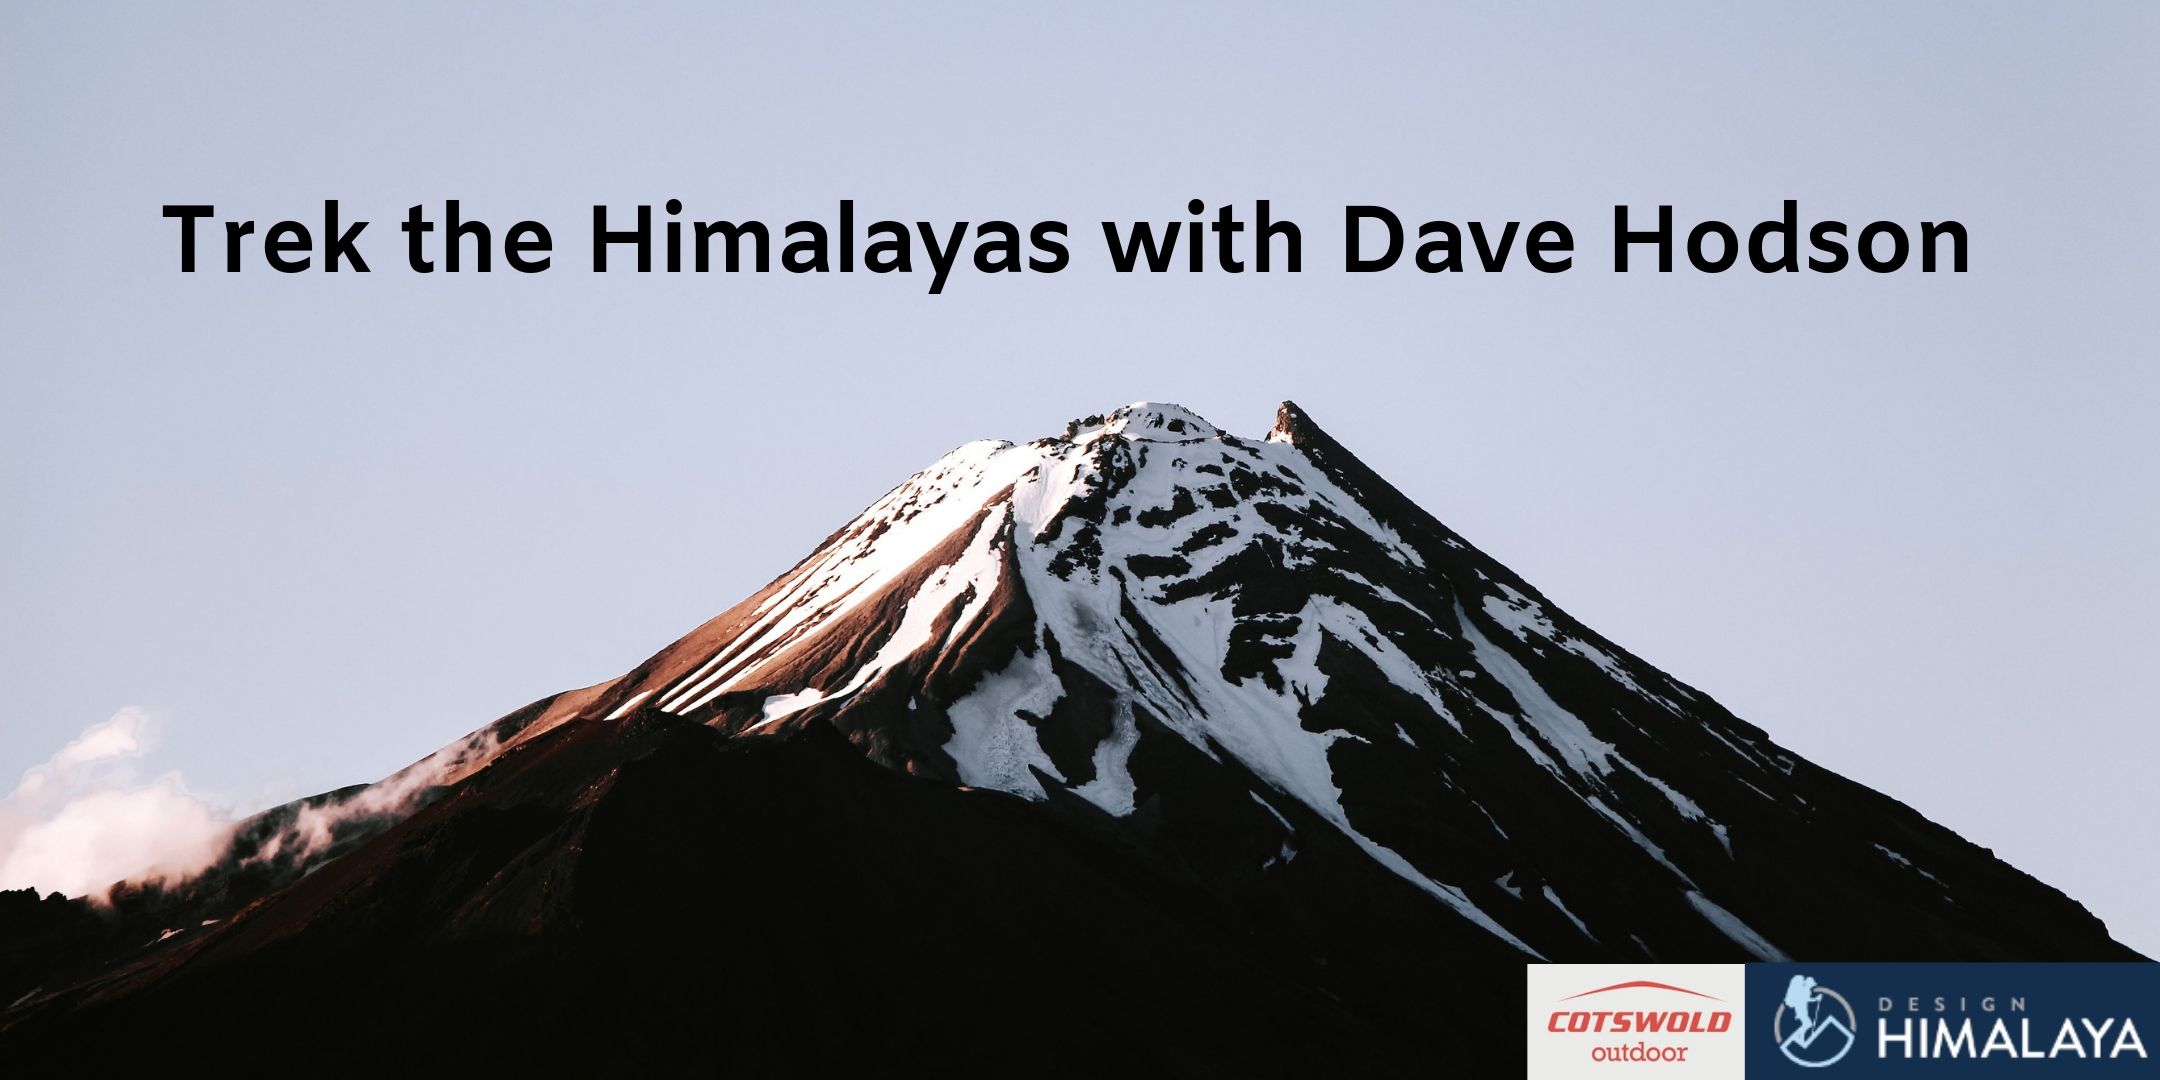 Trek_the_Himalayas_with_Dave_Hodson_2.jpg - 174.29 kB